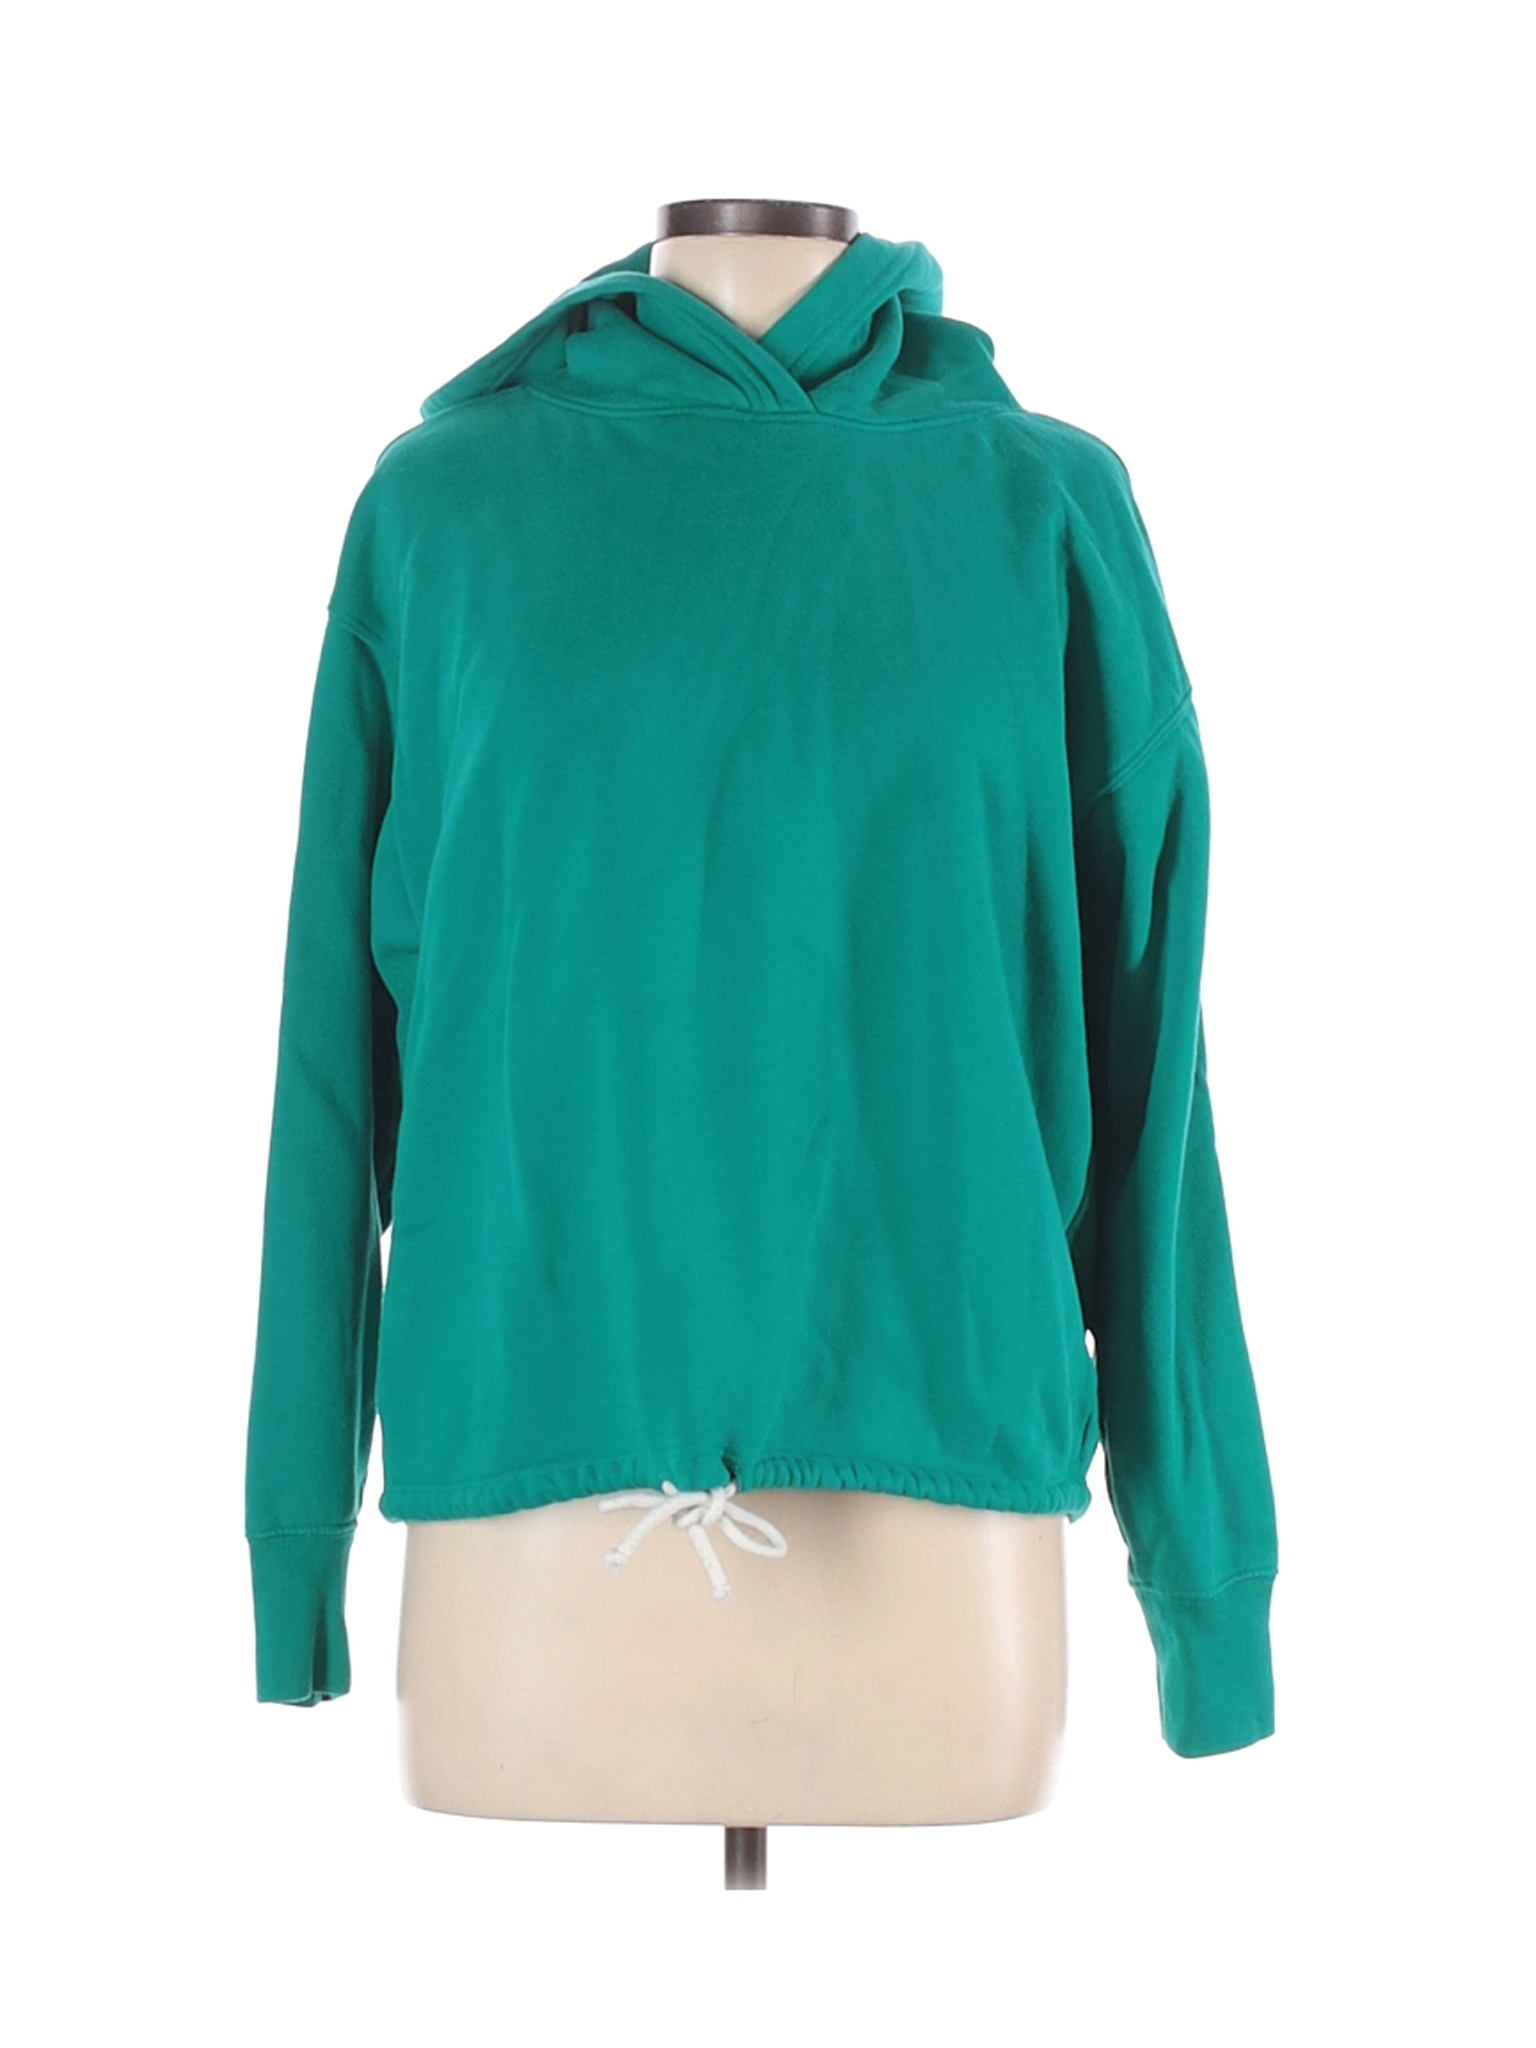 Gap Women Green Pullover Hoodie S | eBay